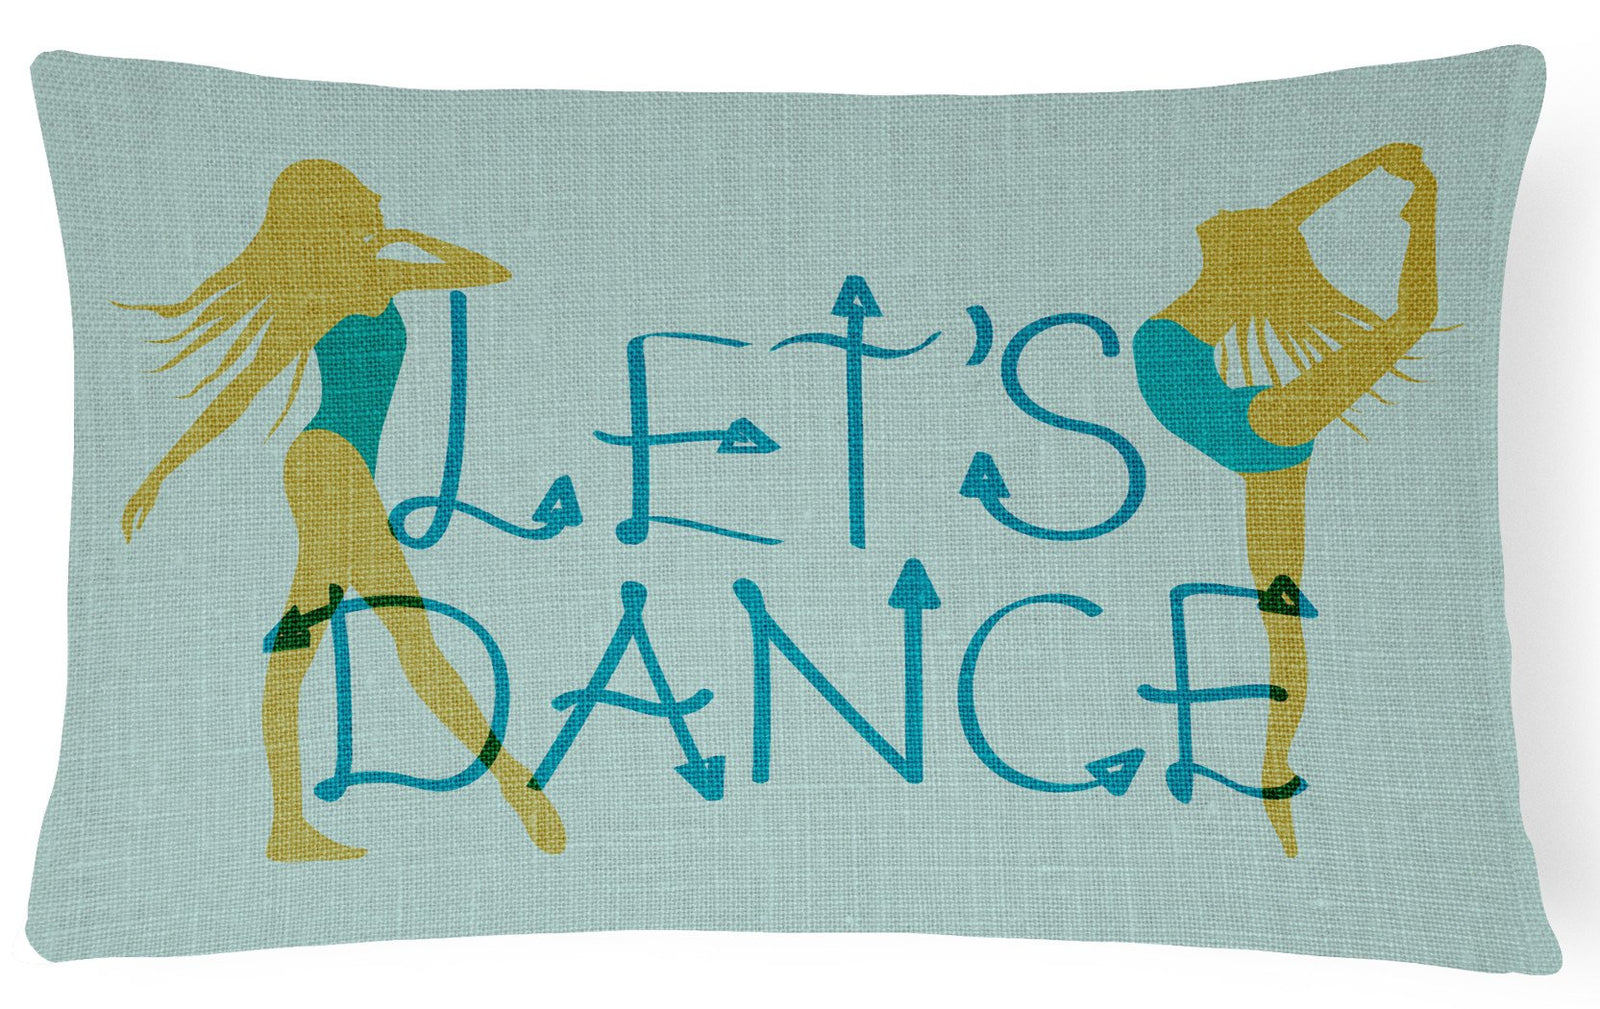 Let's Dance Linen Teal Canvas Fabric Decorative Pillow BB5374PW1216 by Caroline's Treasures